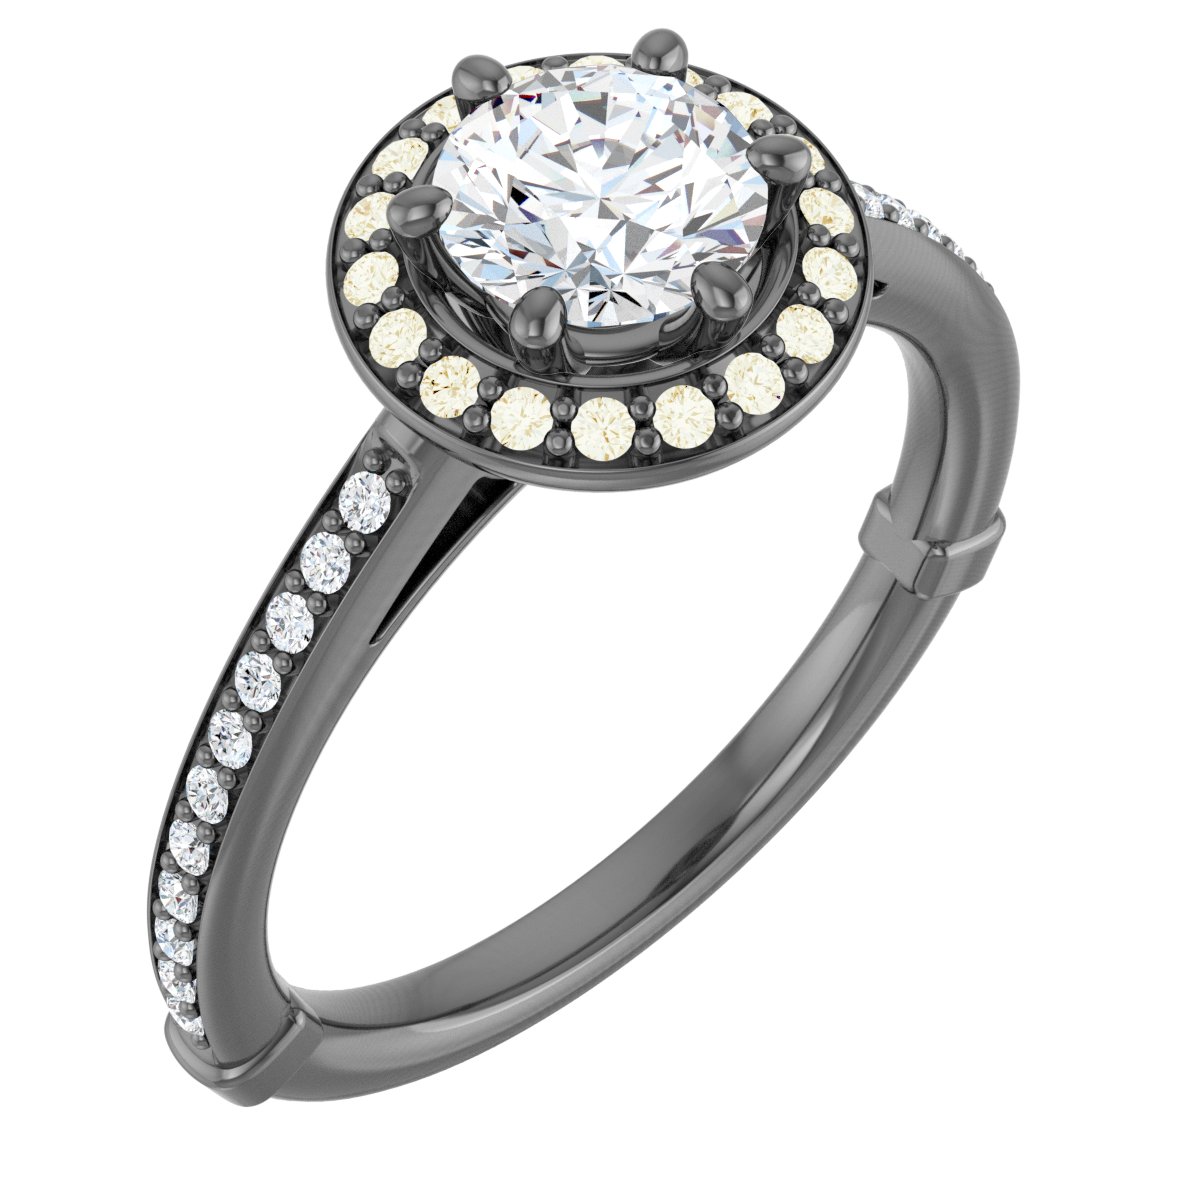 Halo-Styled Engagement Ring Mounting